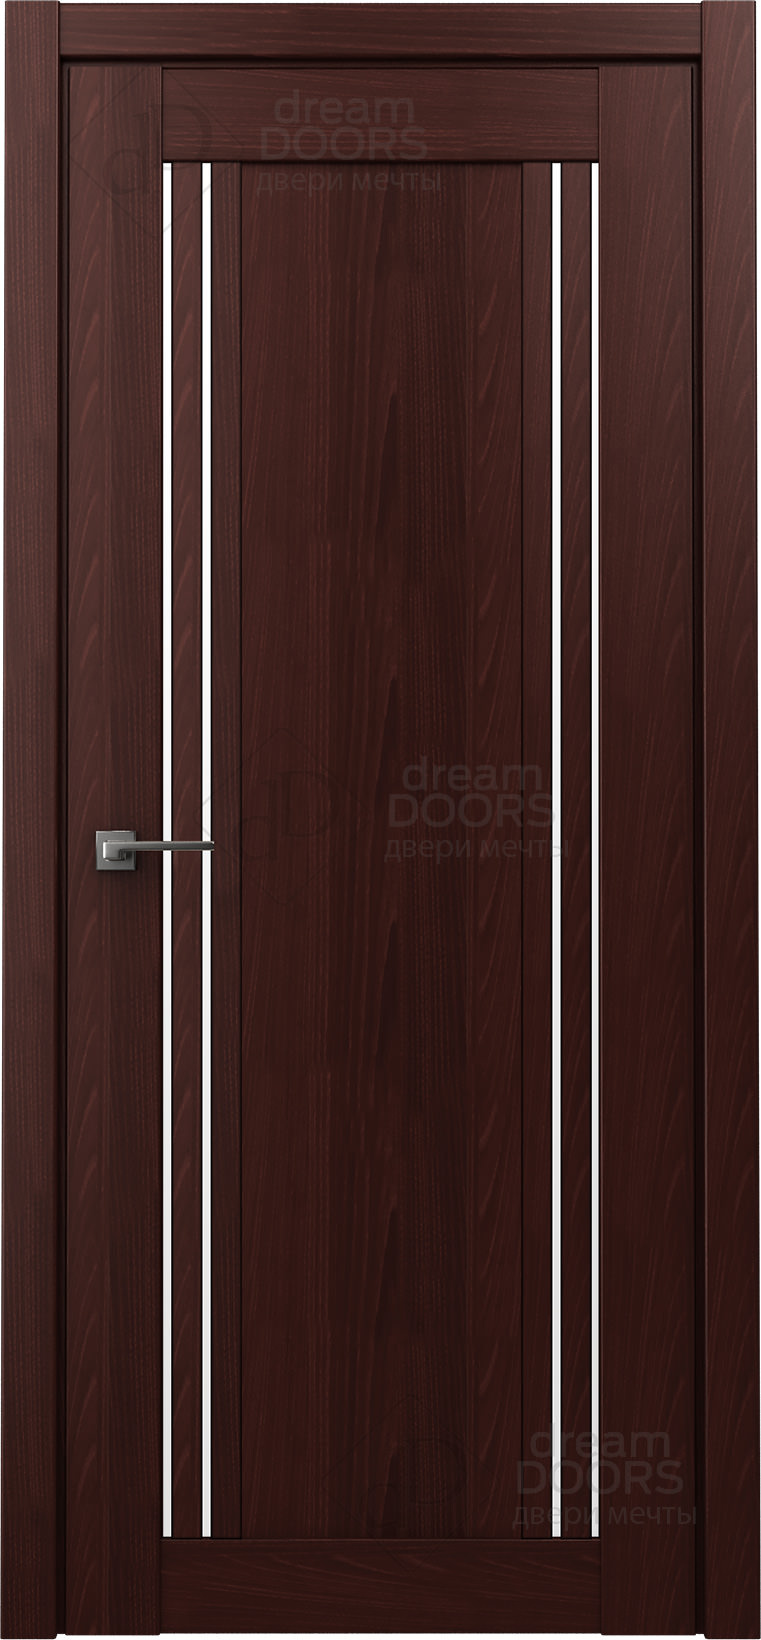 Dream Doors Межкомнатная дверь Престиж 7, арт. 16436 - фото №1